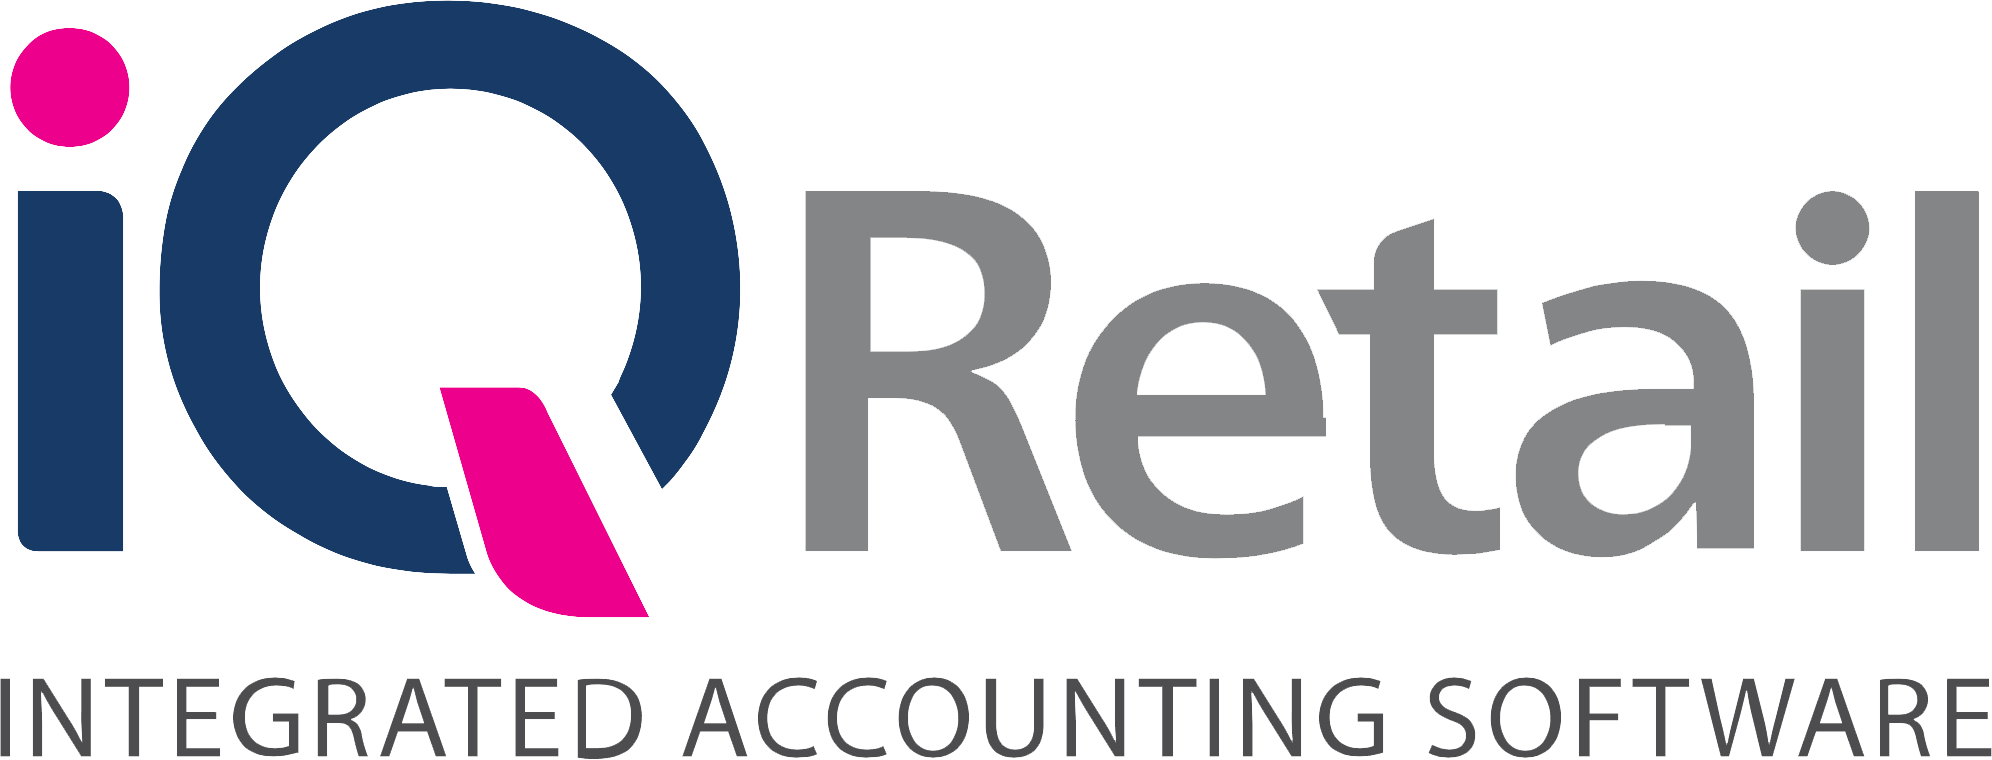 Retail Logo - Account Software | POS | Financial Accounting Software – IQ Retail